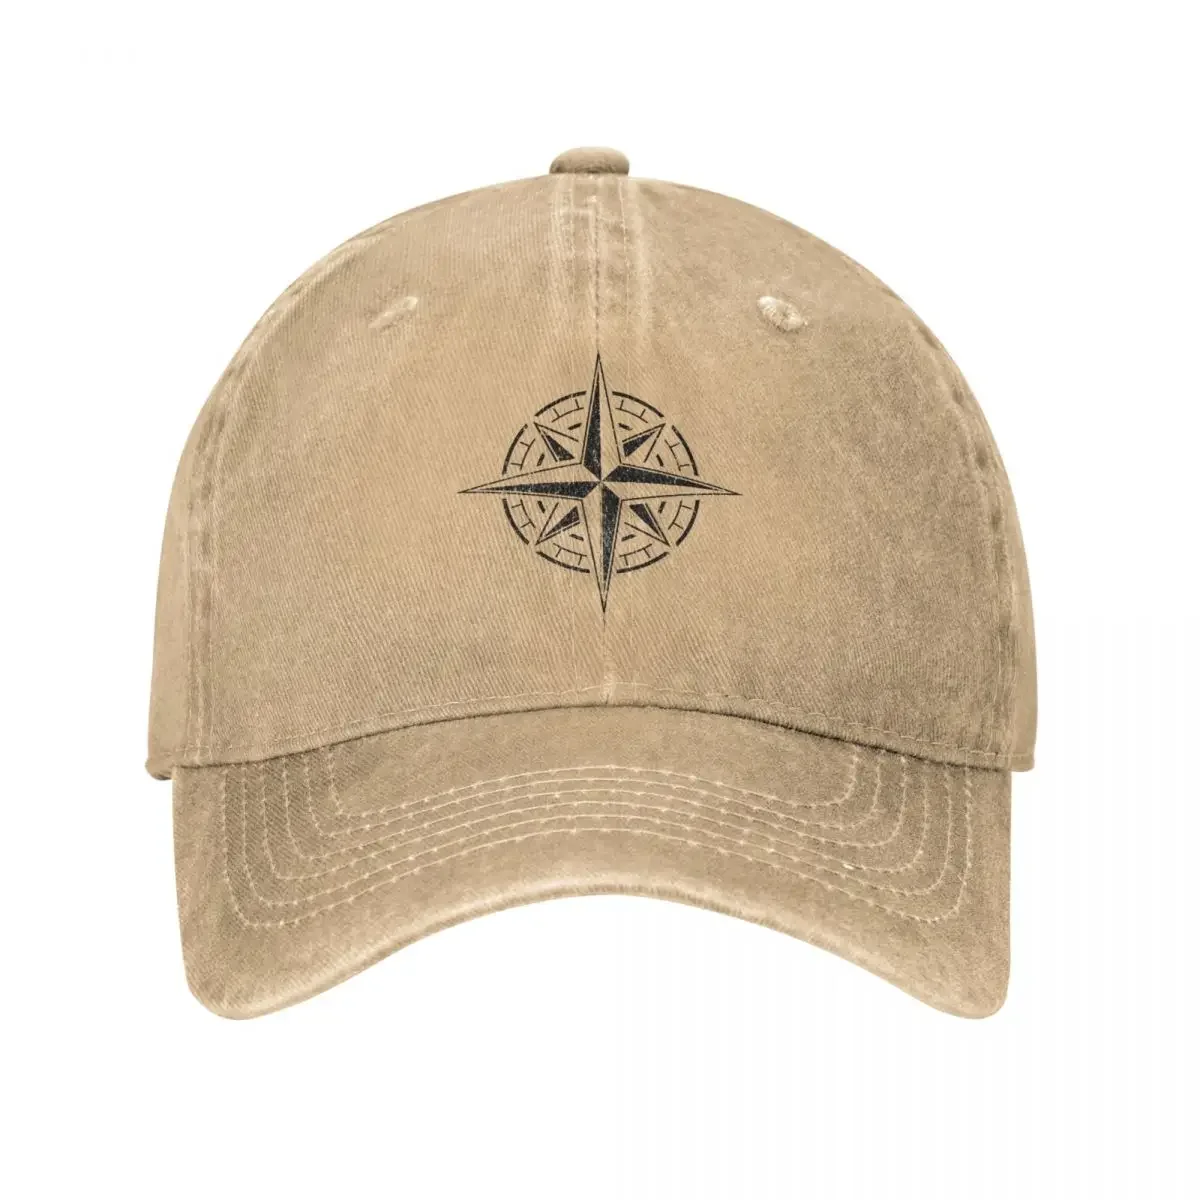 

Compass Rose With Grunge Effect Baseball Cap cowboy hat Peaked cap Cowboy Bebop Hats Men and women hats